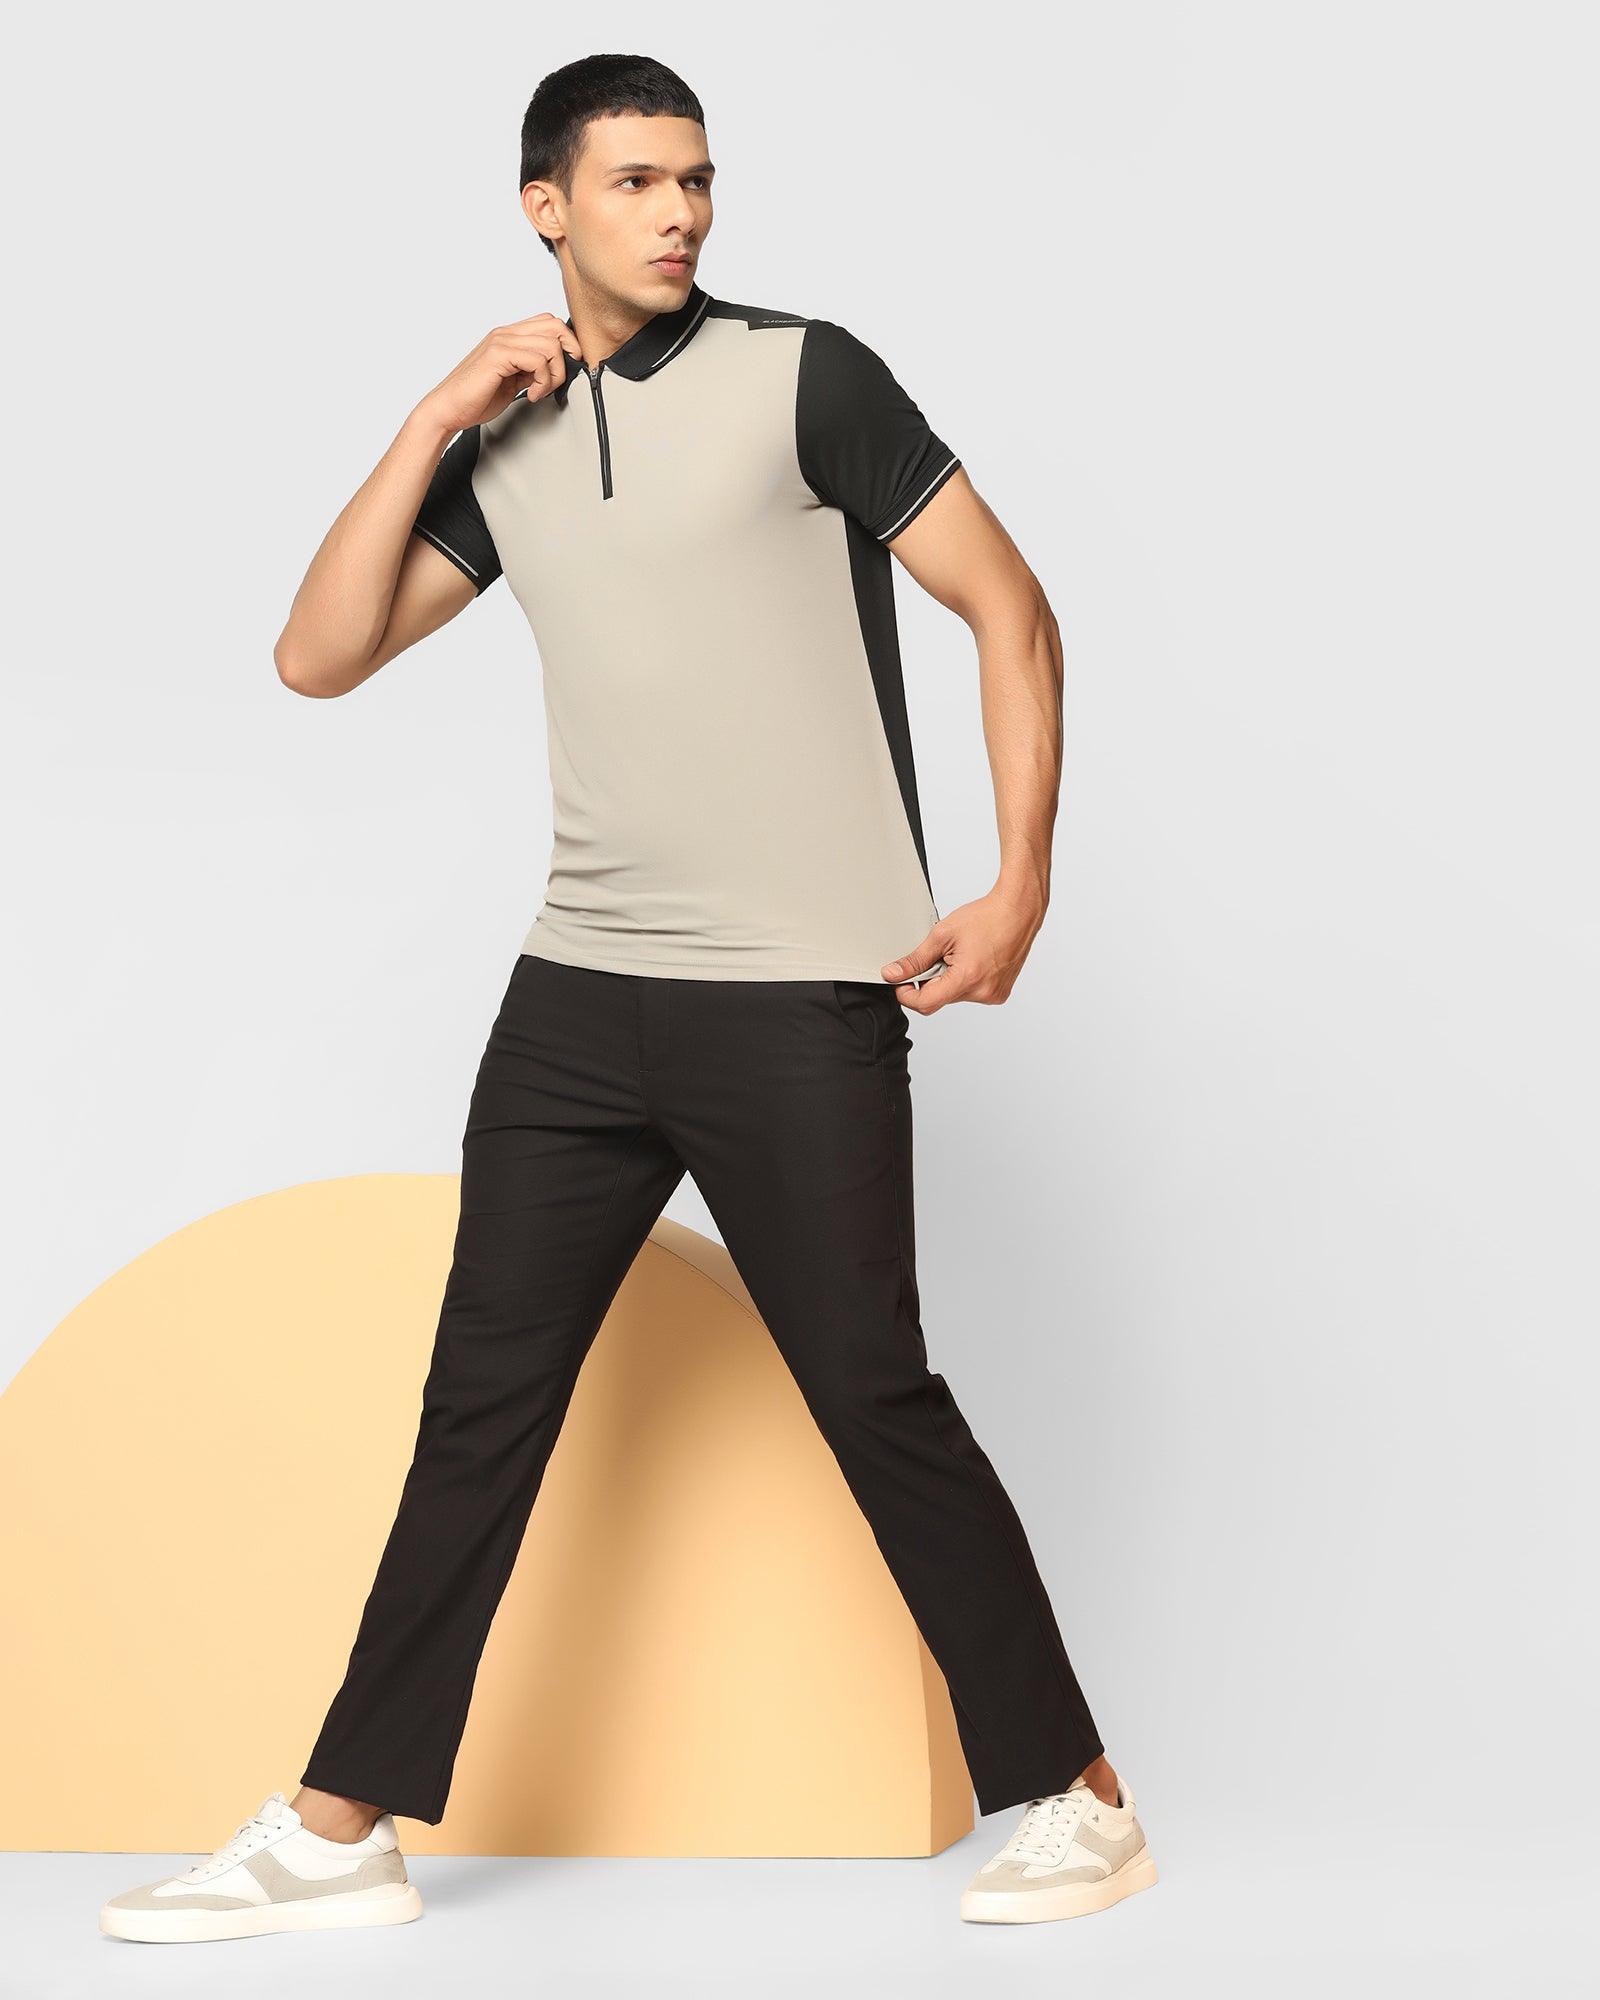 TechPro Polo Black Solid T Shirt - Forward